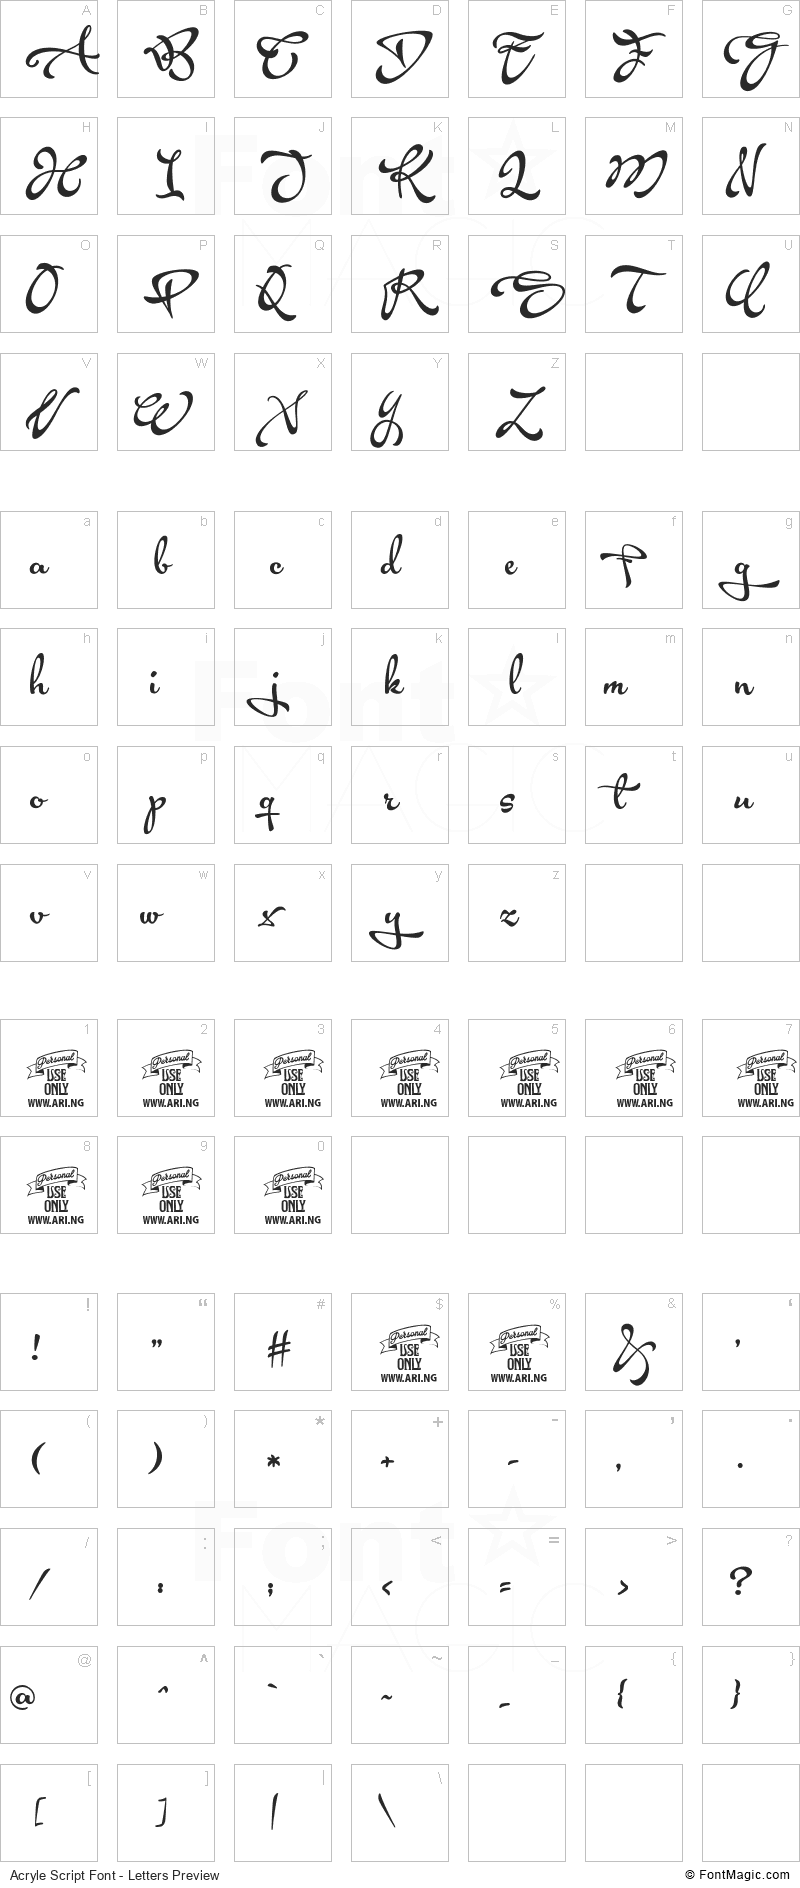 Acryle Script Font - All Latters Preview Chart